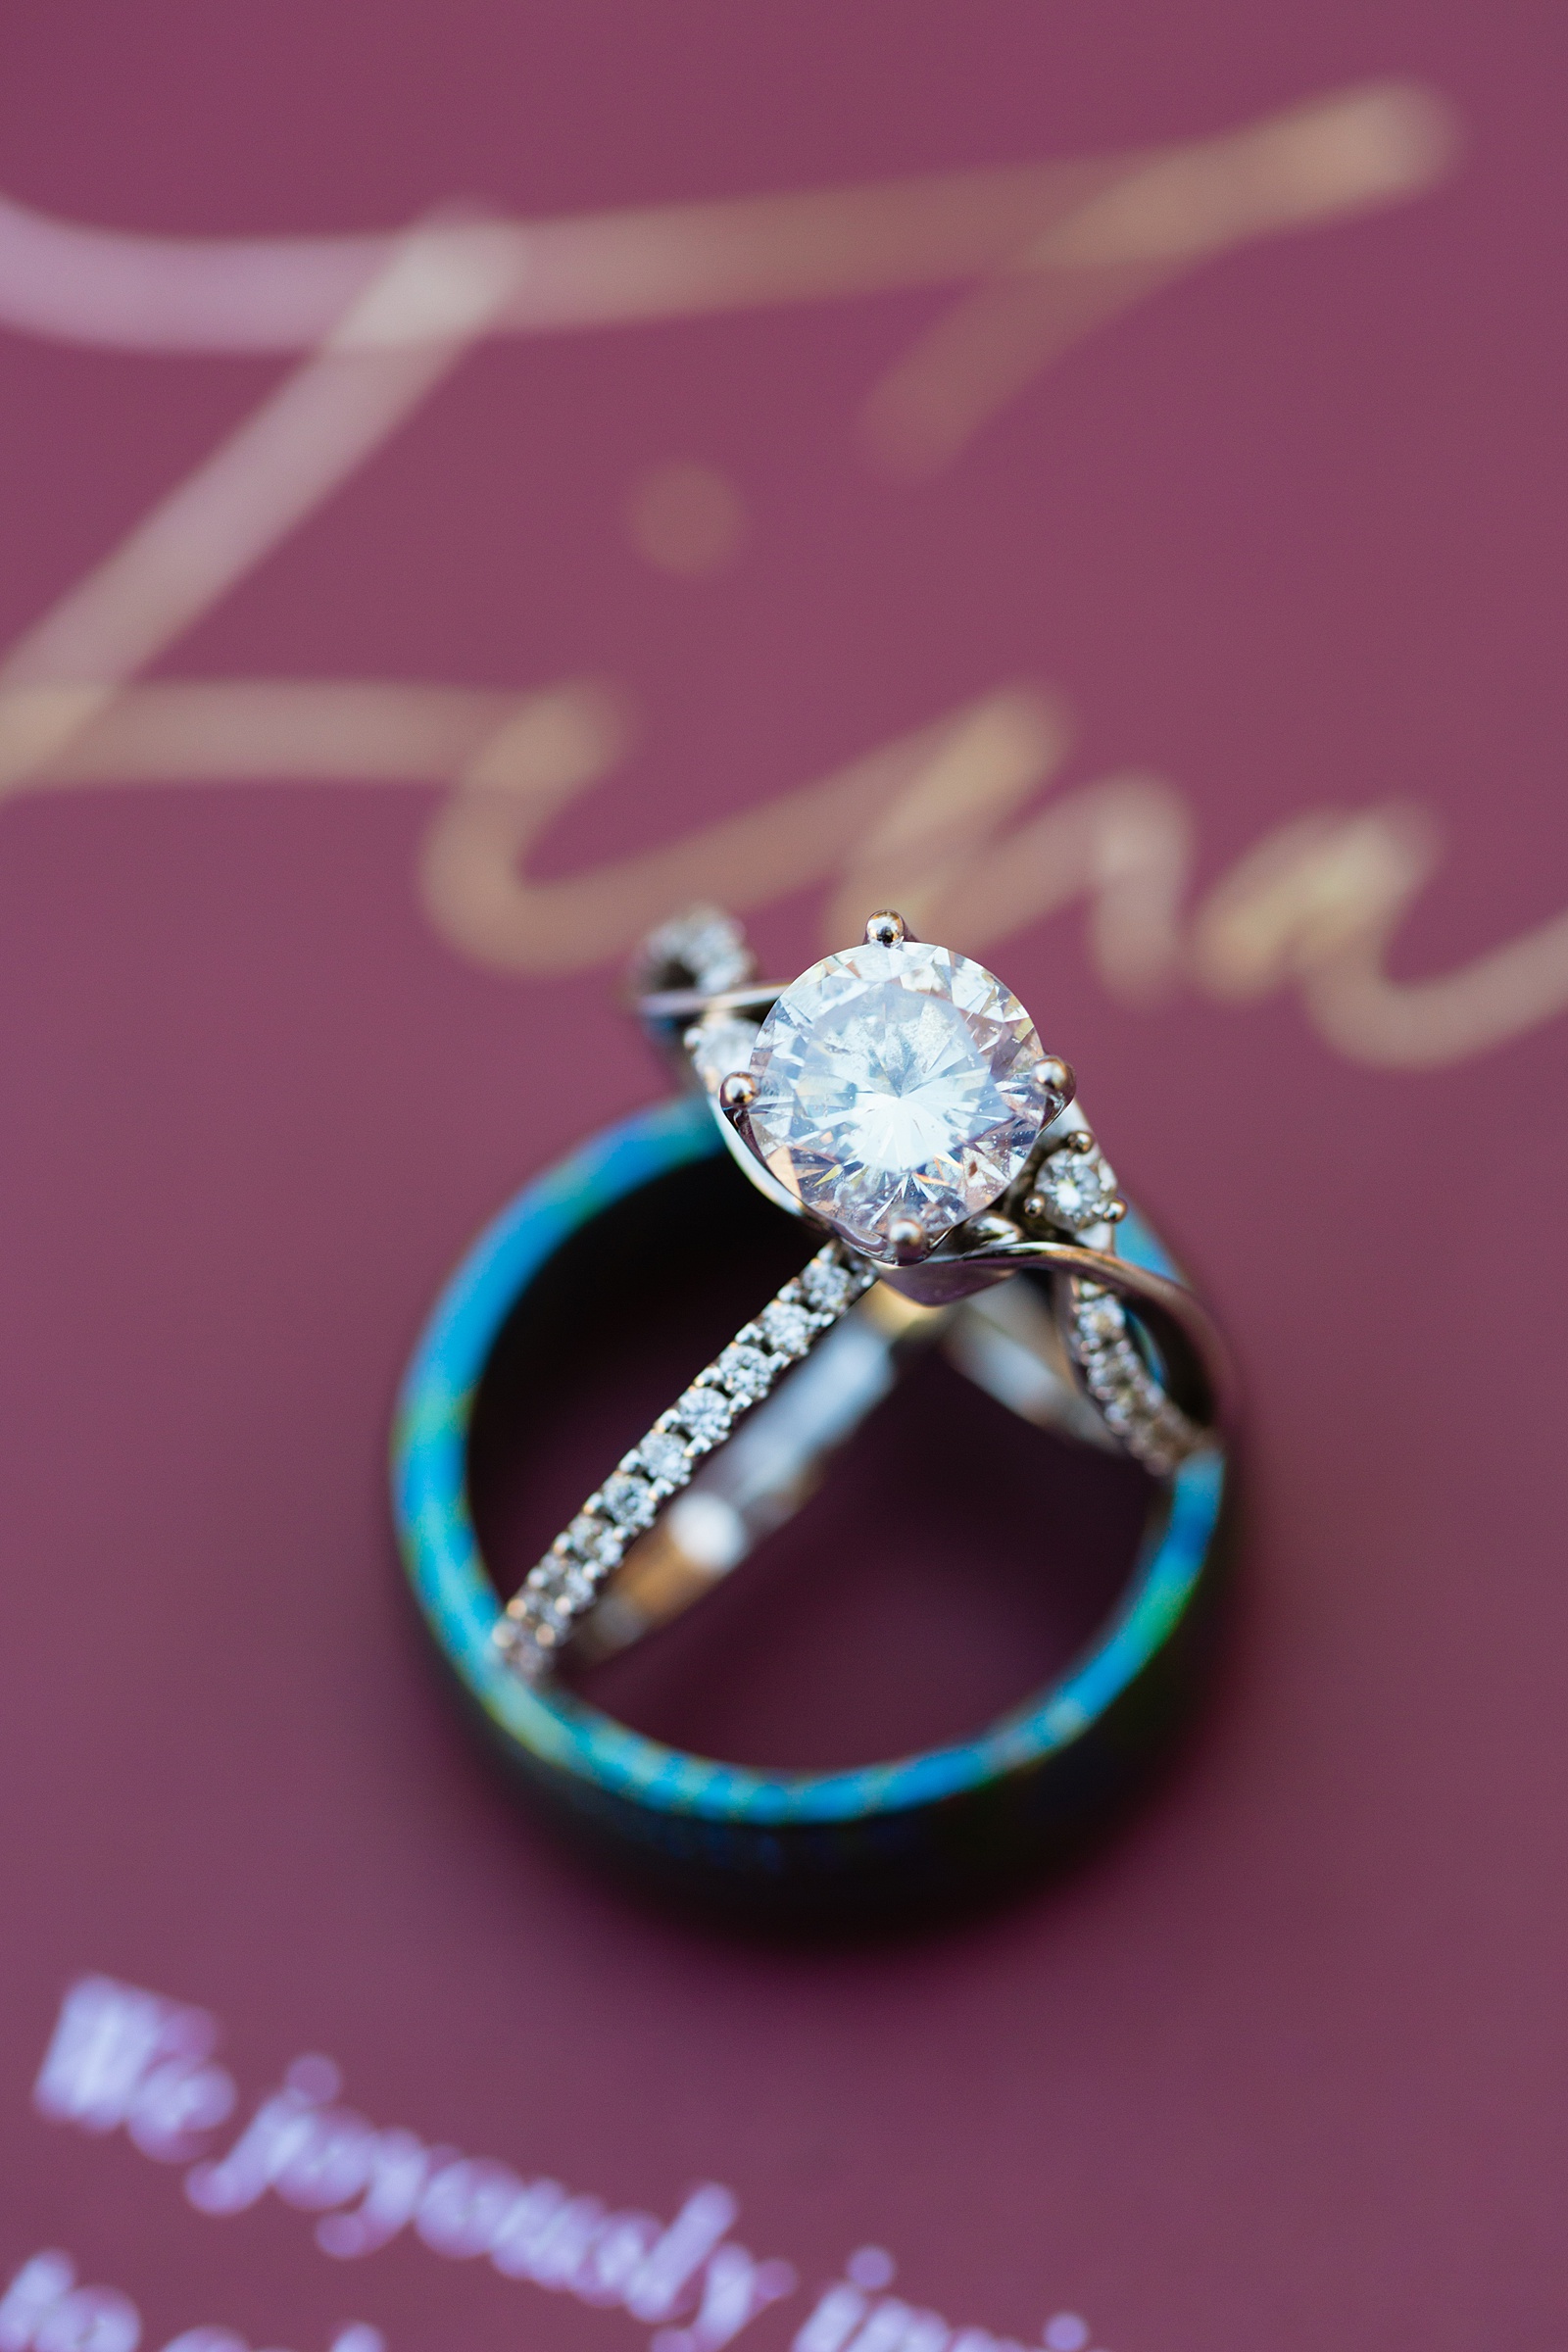 Wedding rings on top of maroon invitations by Phoenix wedding photographer PMA Photography.